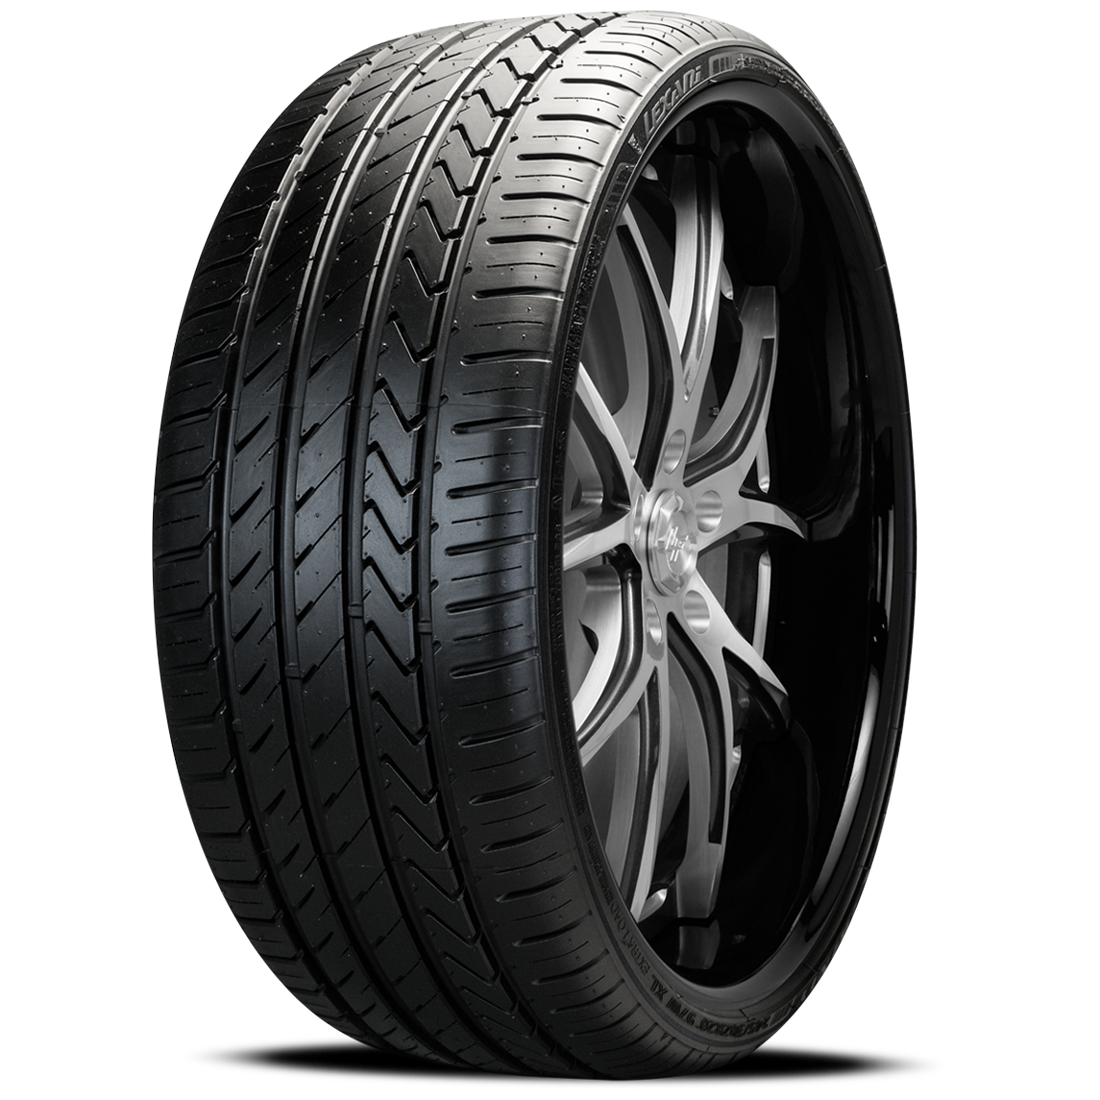 LEXANI LX-TWENTY 275/35ZR24 (31.3X11.4R 24) Tires